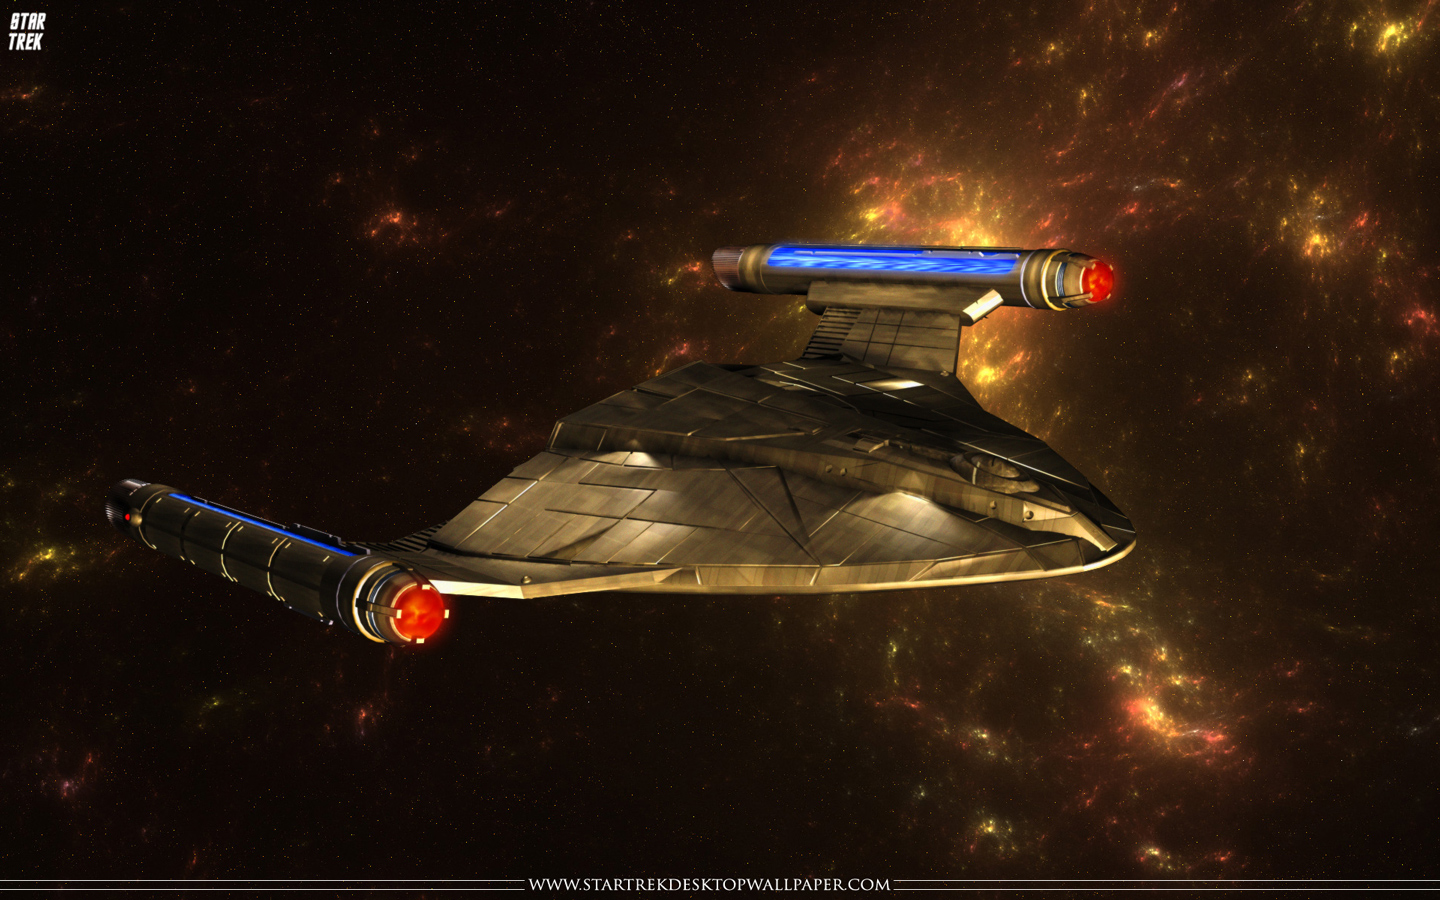 Trek Neptune Class Starship Star Puter Desktop Wallpaper